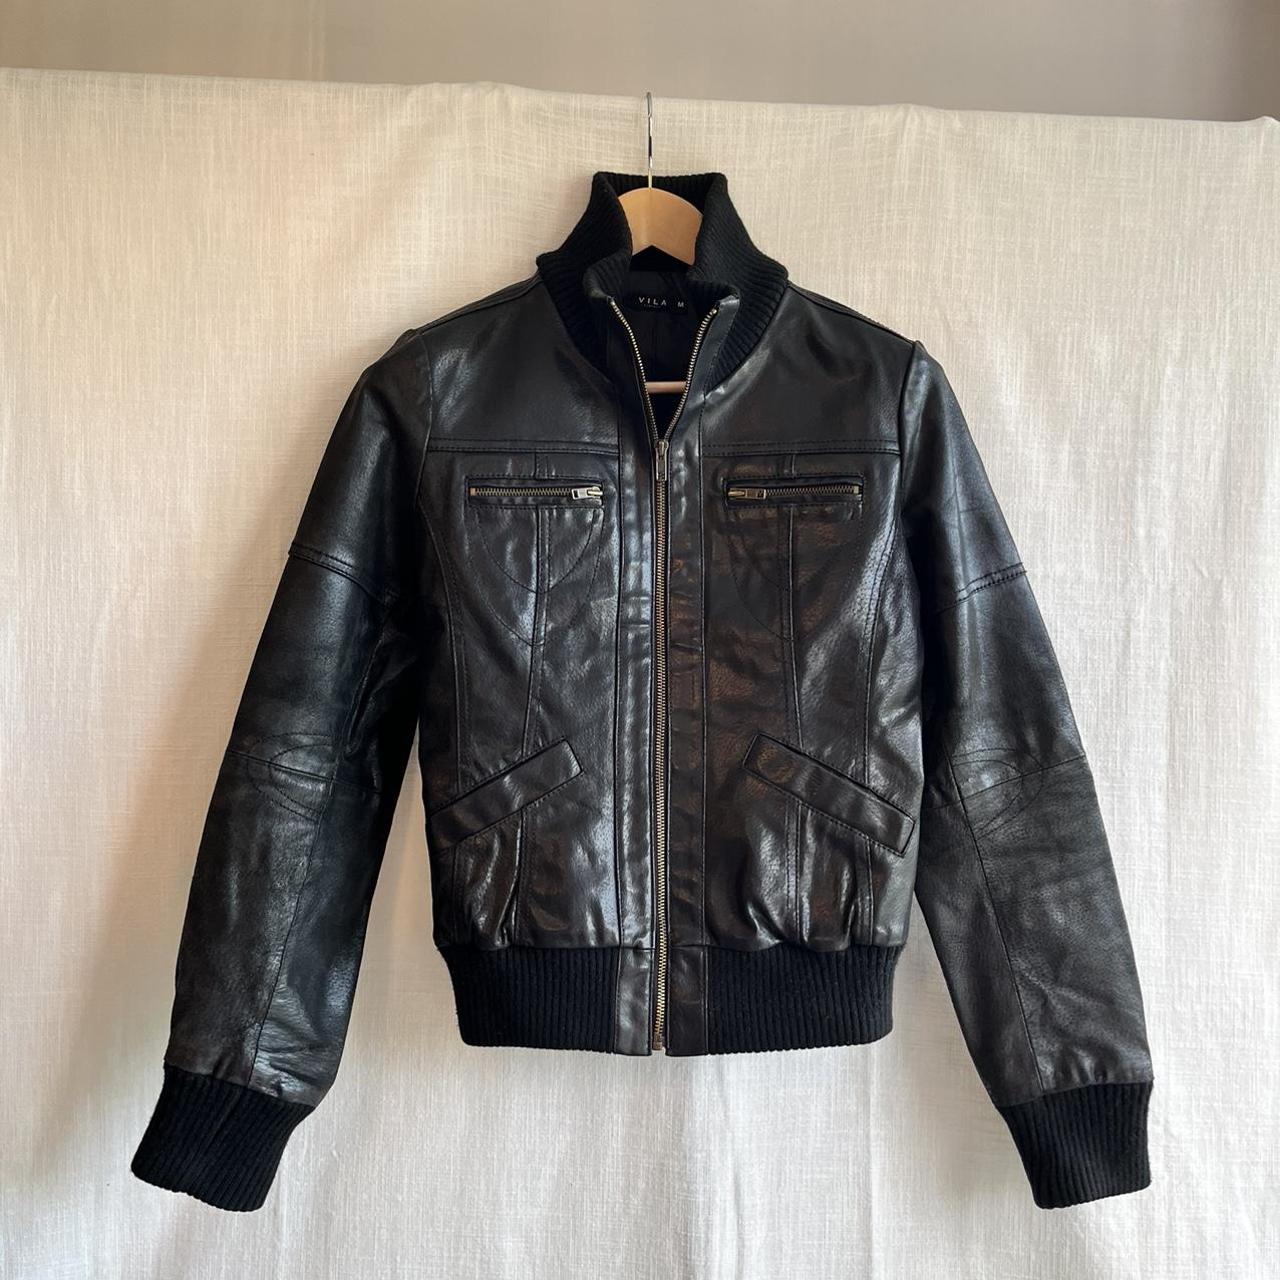 Ladies Villa Clothing #leather bomber jacket in... - Depop